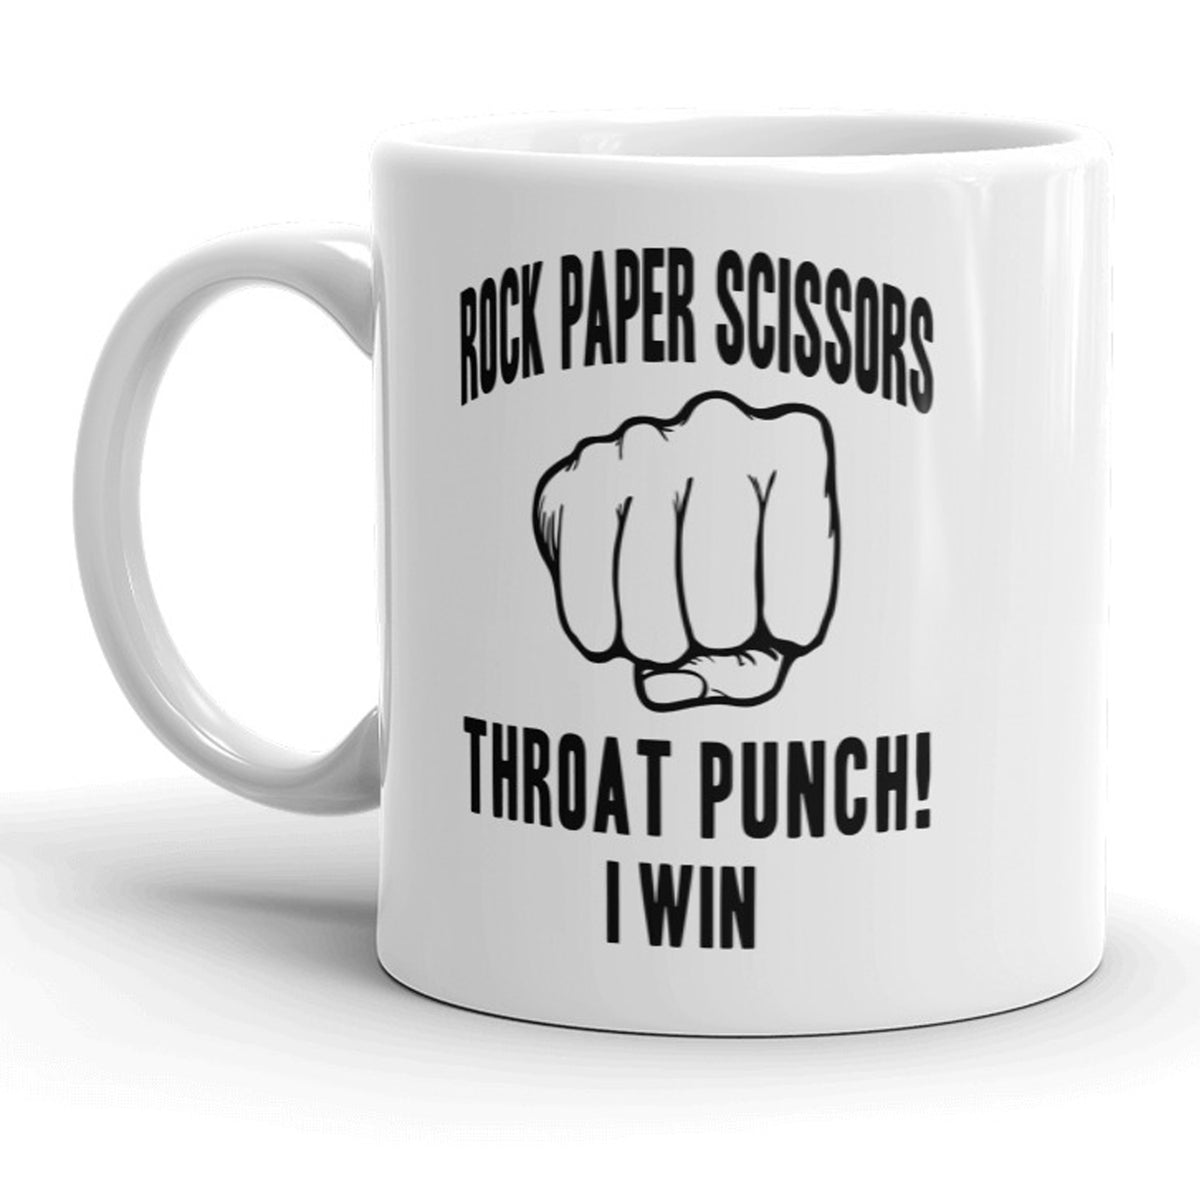 Funny White Rock Paper Scissors Coffee Mug Nerdy Sarcastic Tee